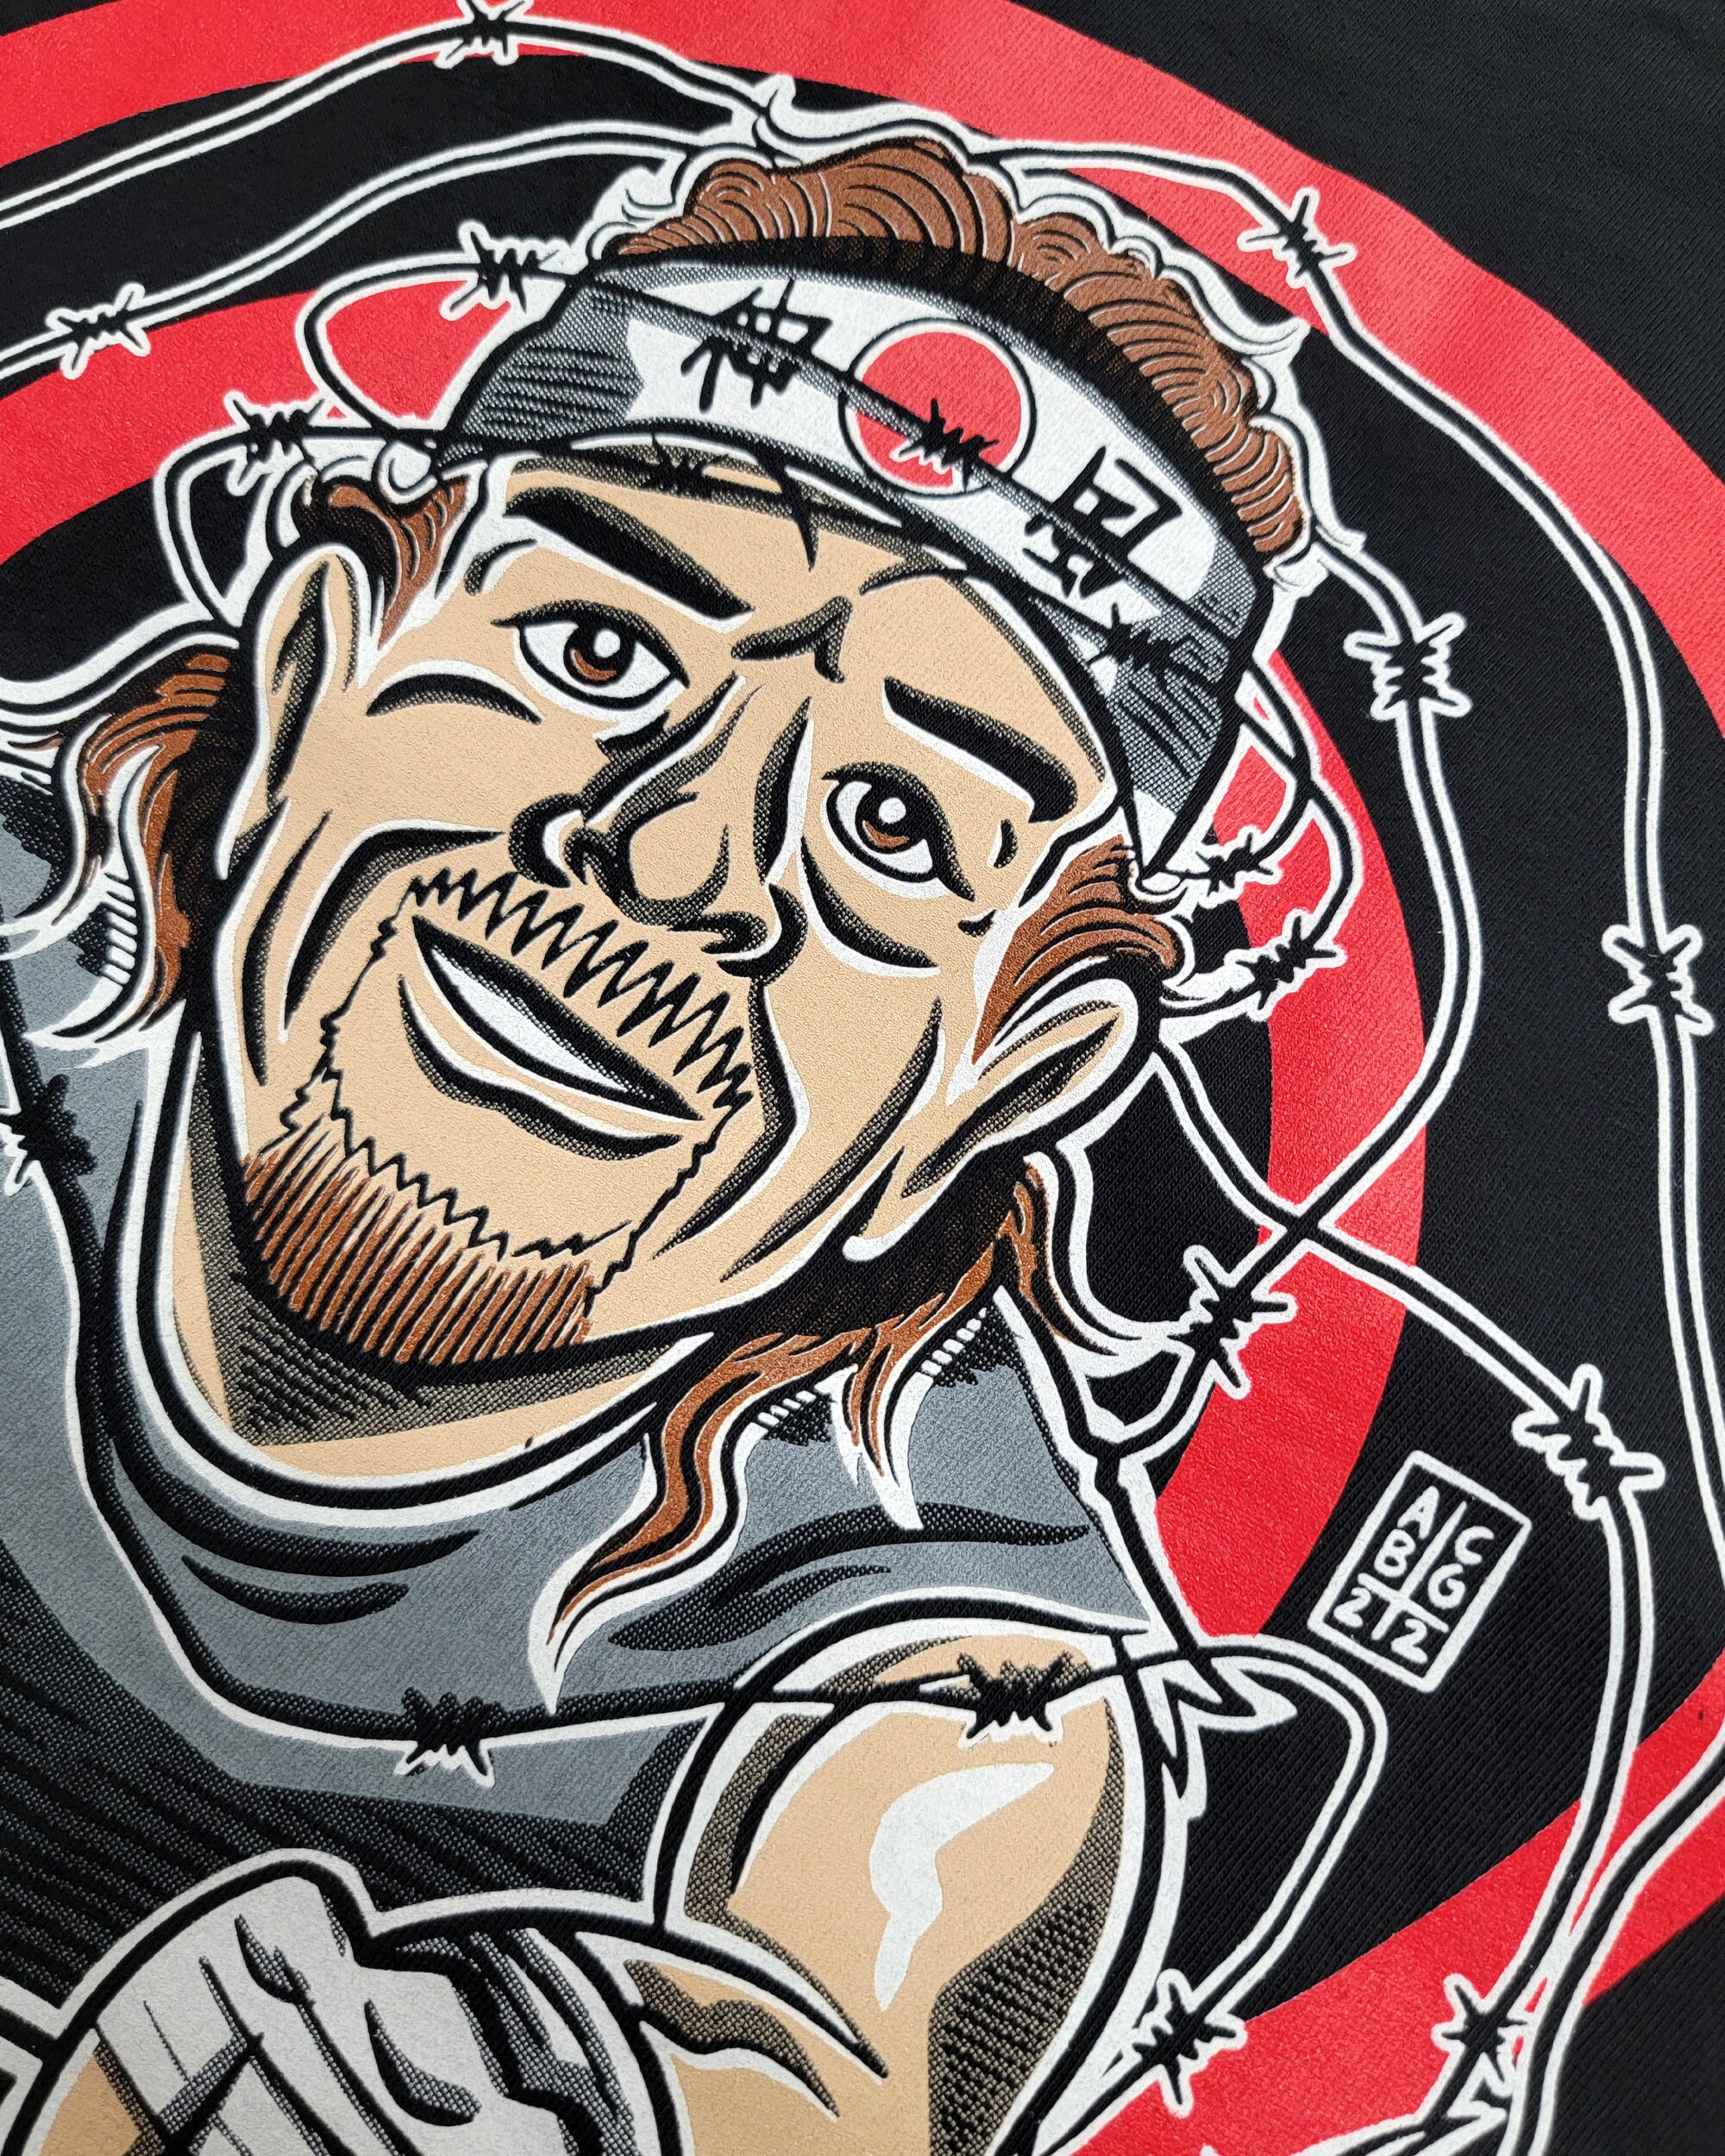 Discover Funker Forever T-Shirt - Cheapo Grosso Blackline Artwork Pro Wrestling Hardcore Punk Terry Funk Ec WW Ric Flair Dusty Rhodes FMW Onita